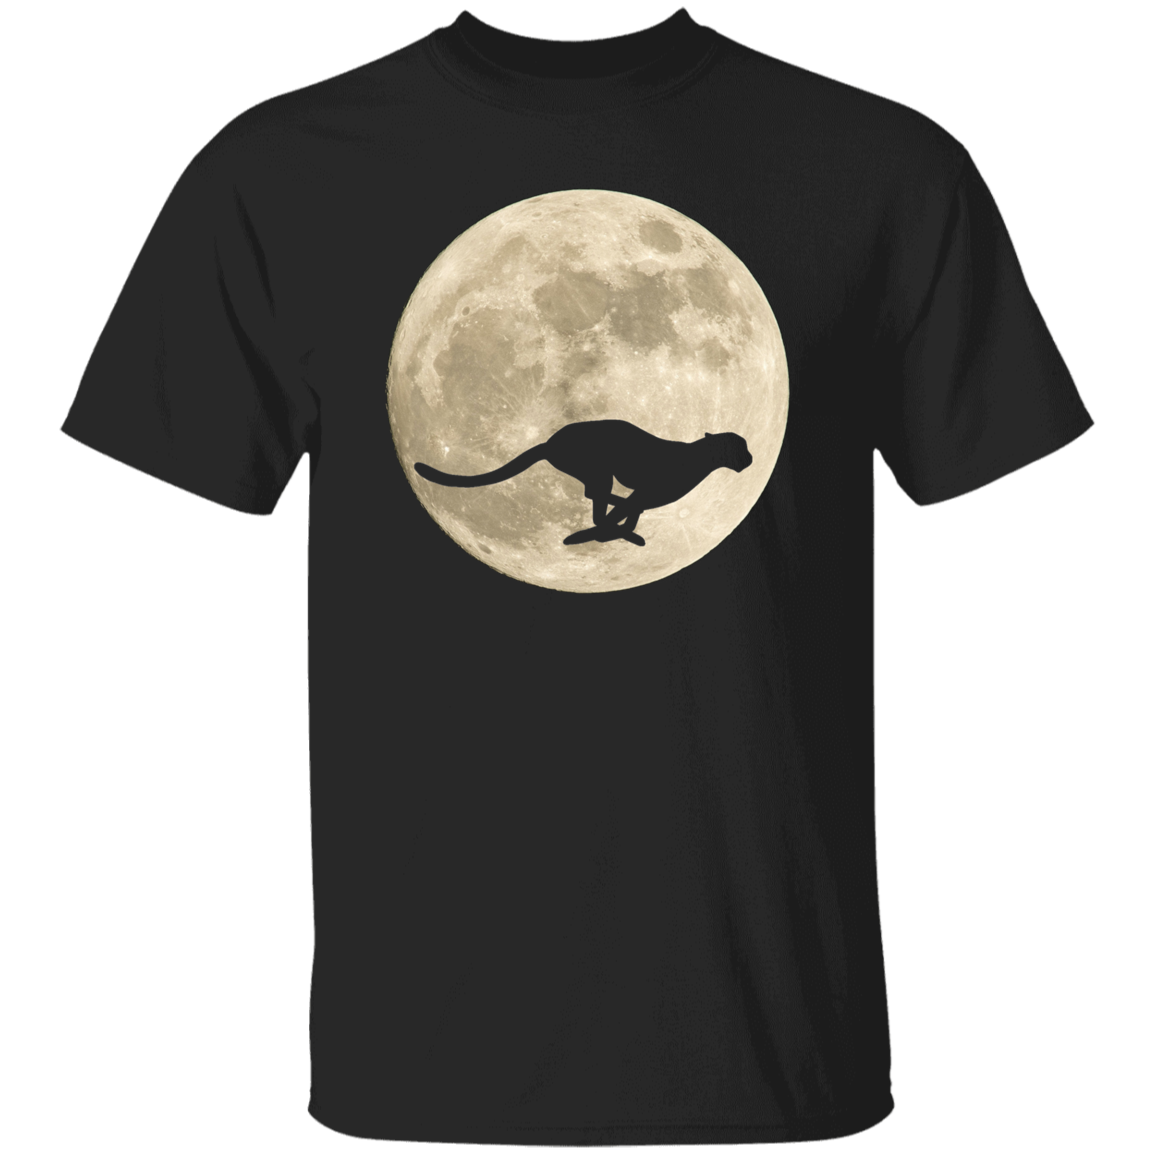 Cheetah Moon - T-shirts, Hoodies and Sweatshirts